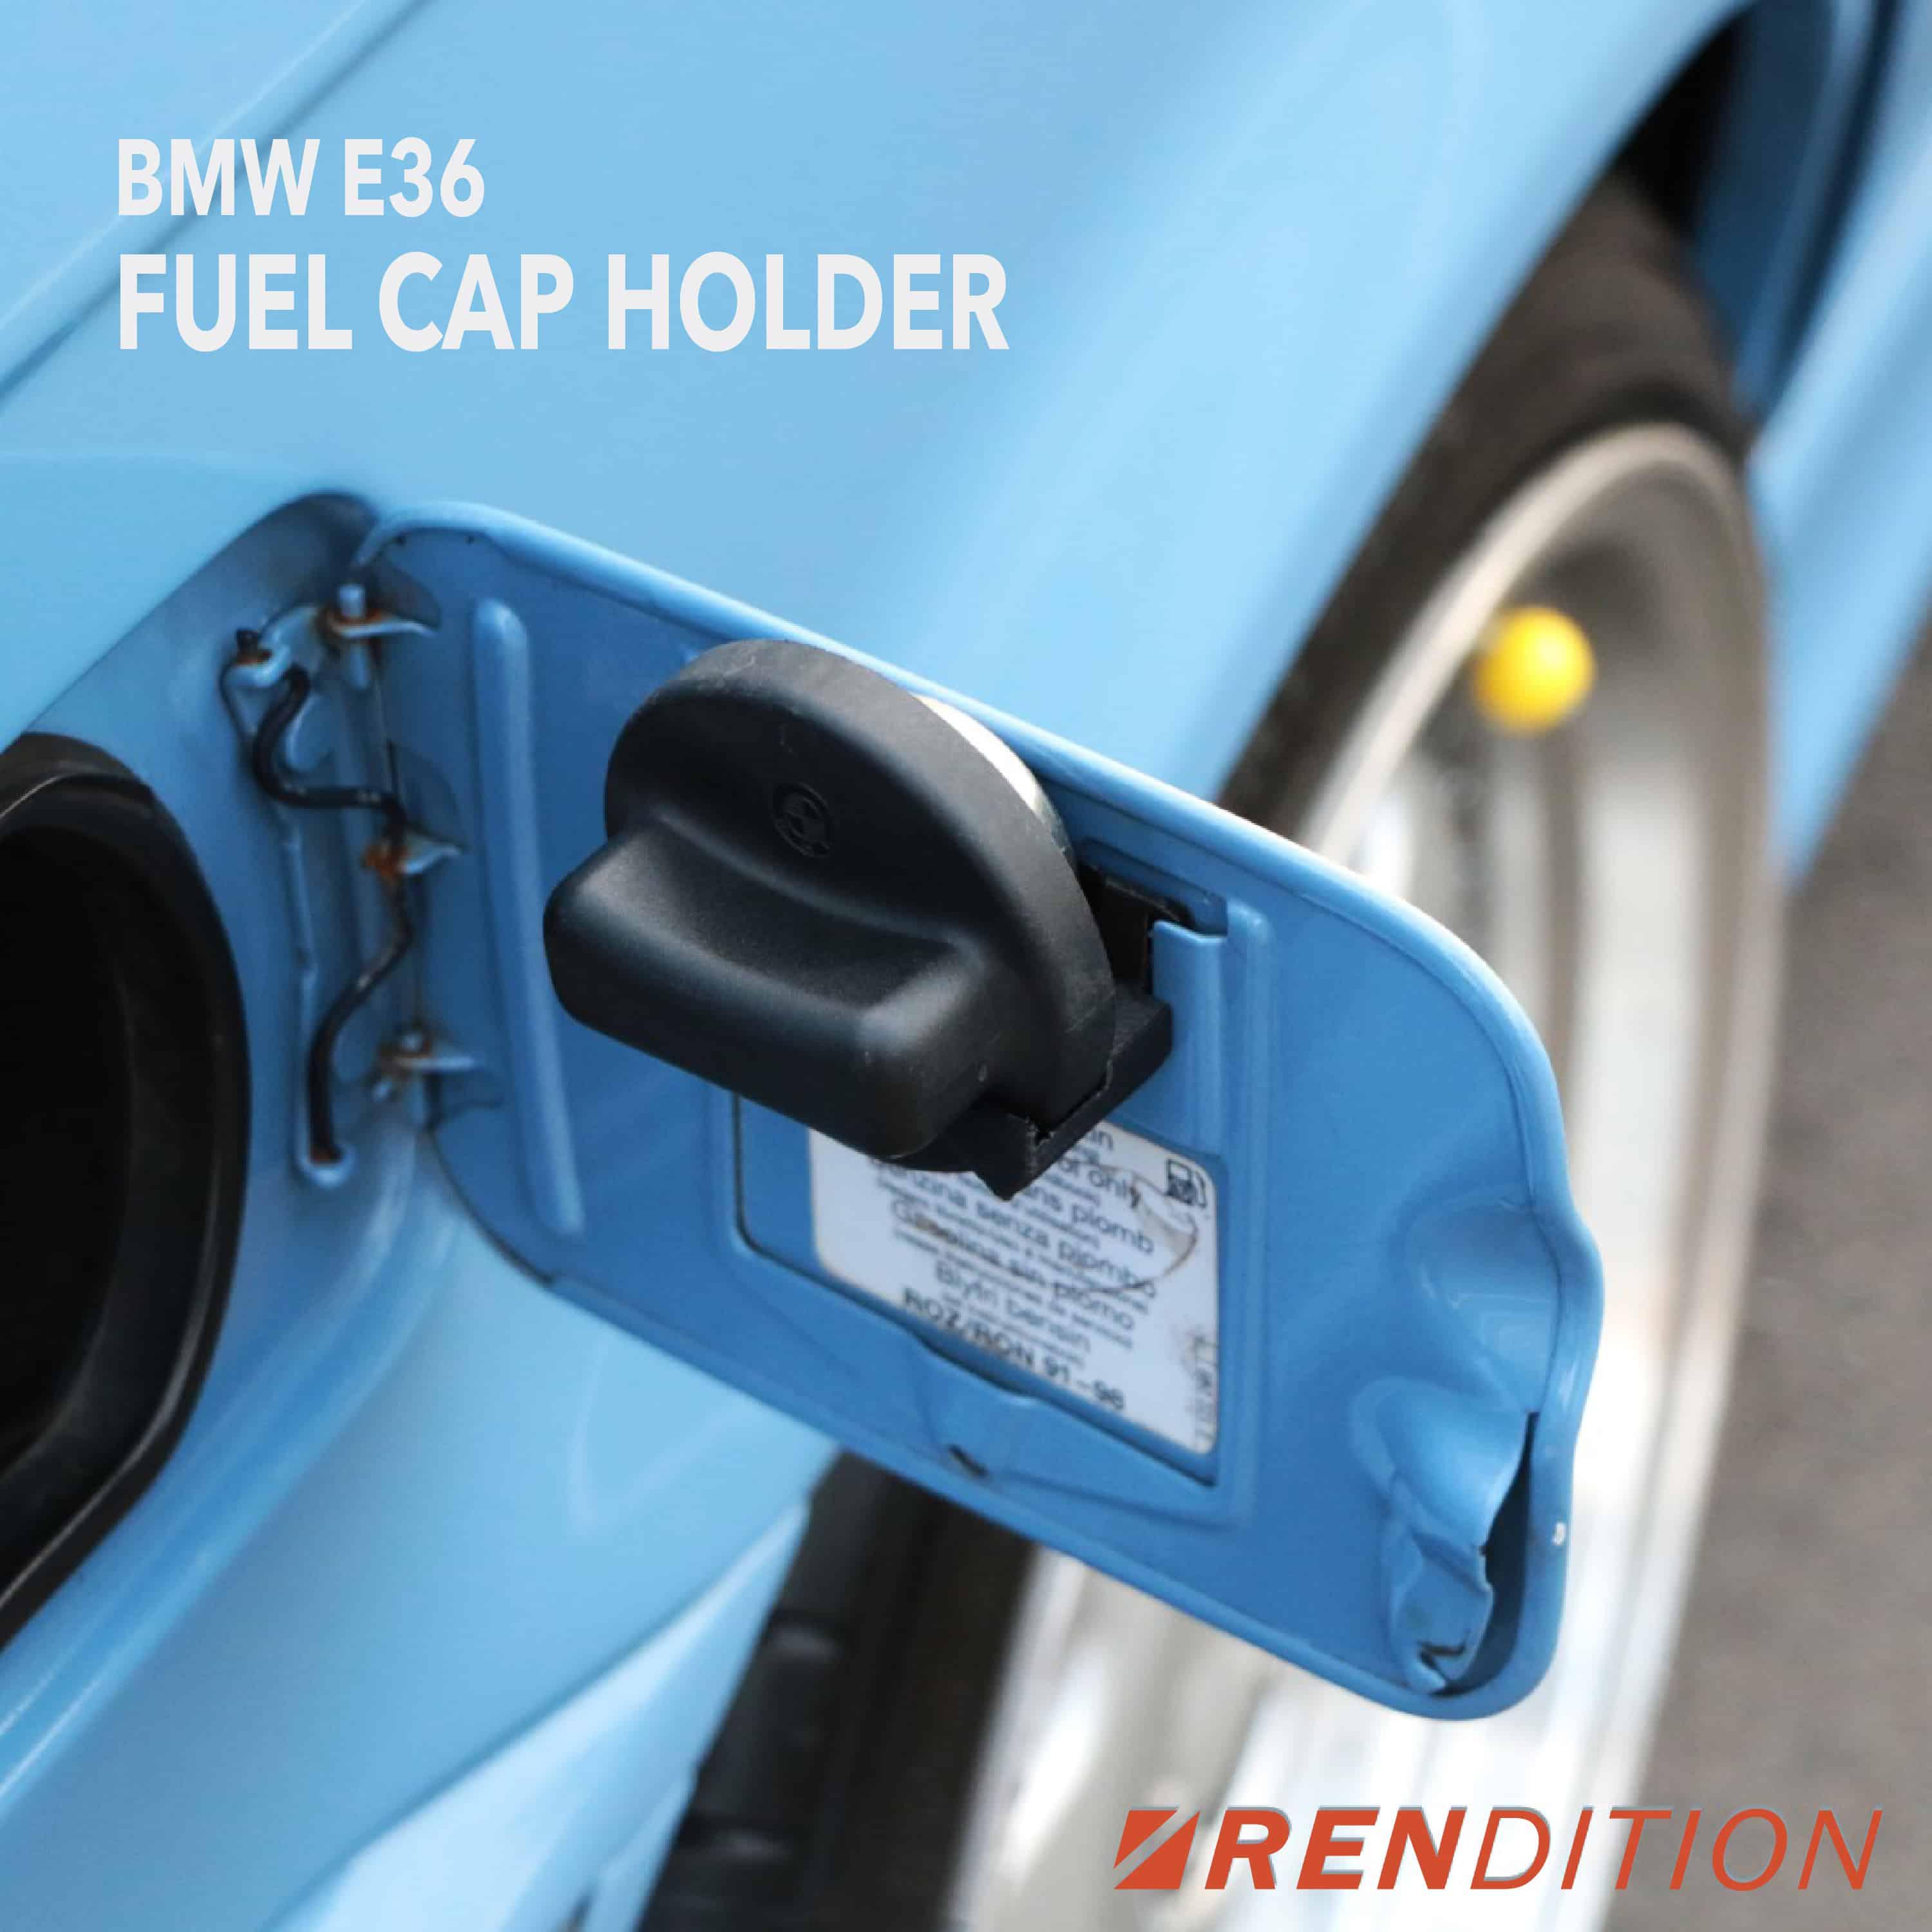 BMW E36 FUEL CAP HOLDER - K2 Industries